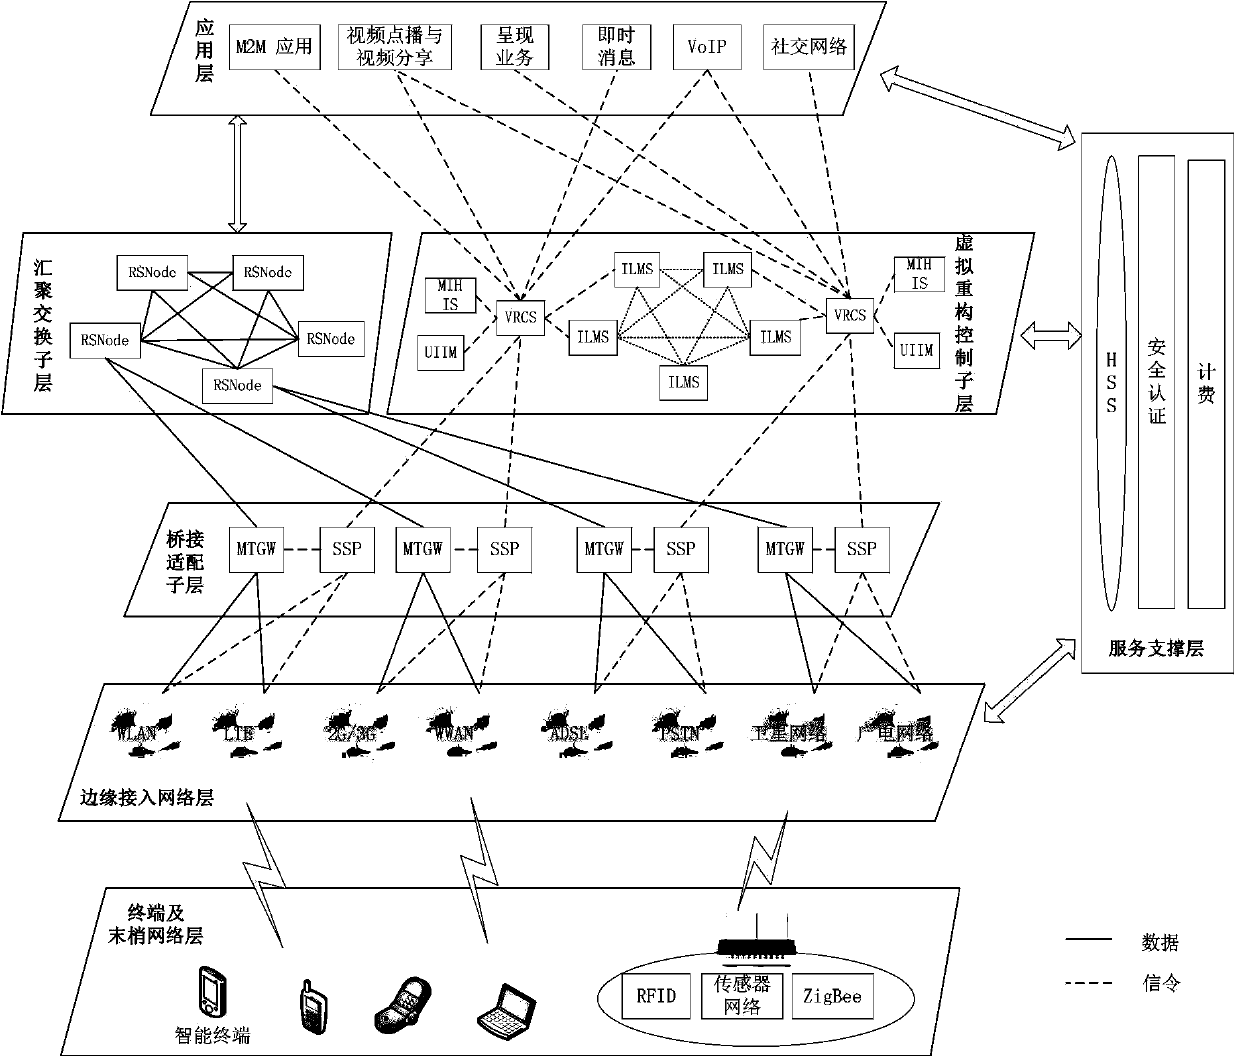 Virtual reconstruction ubiquitous network architecture based on identity-position separation